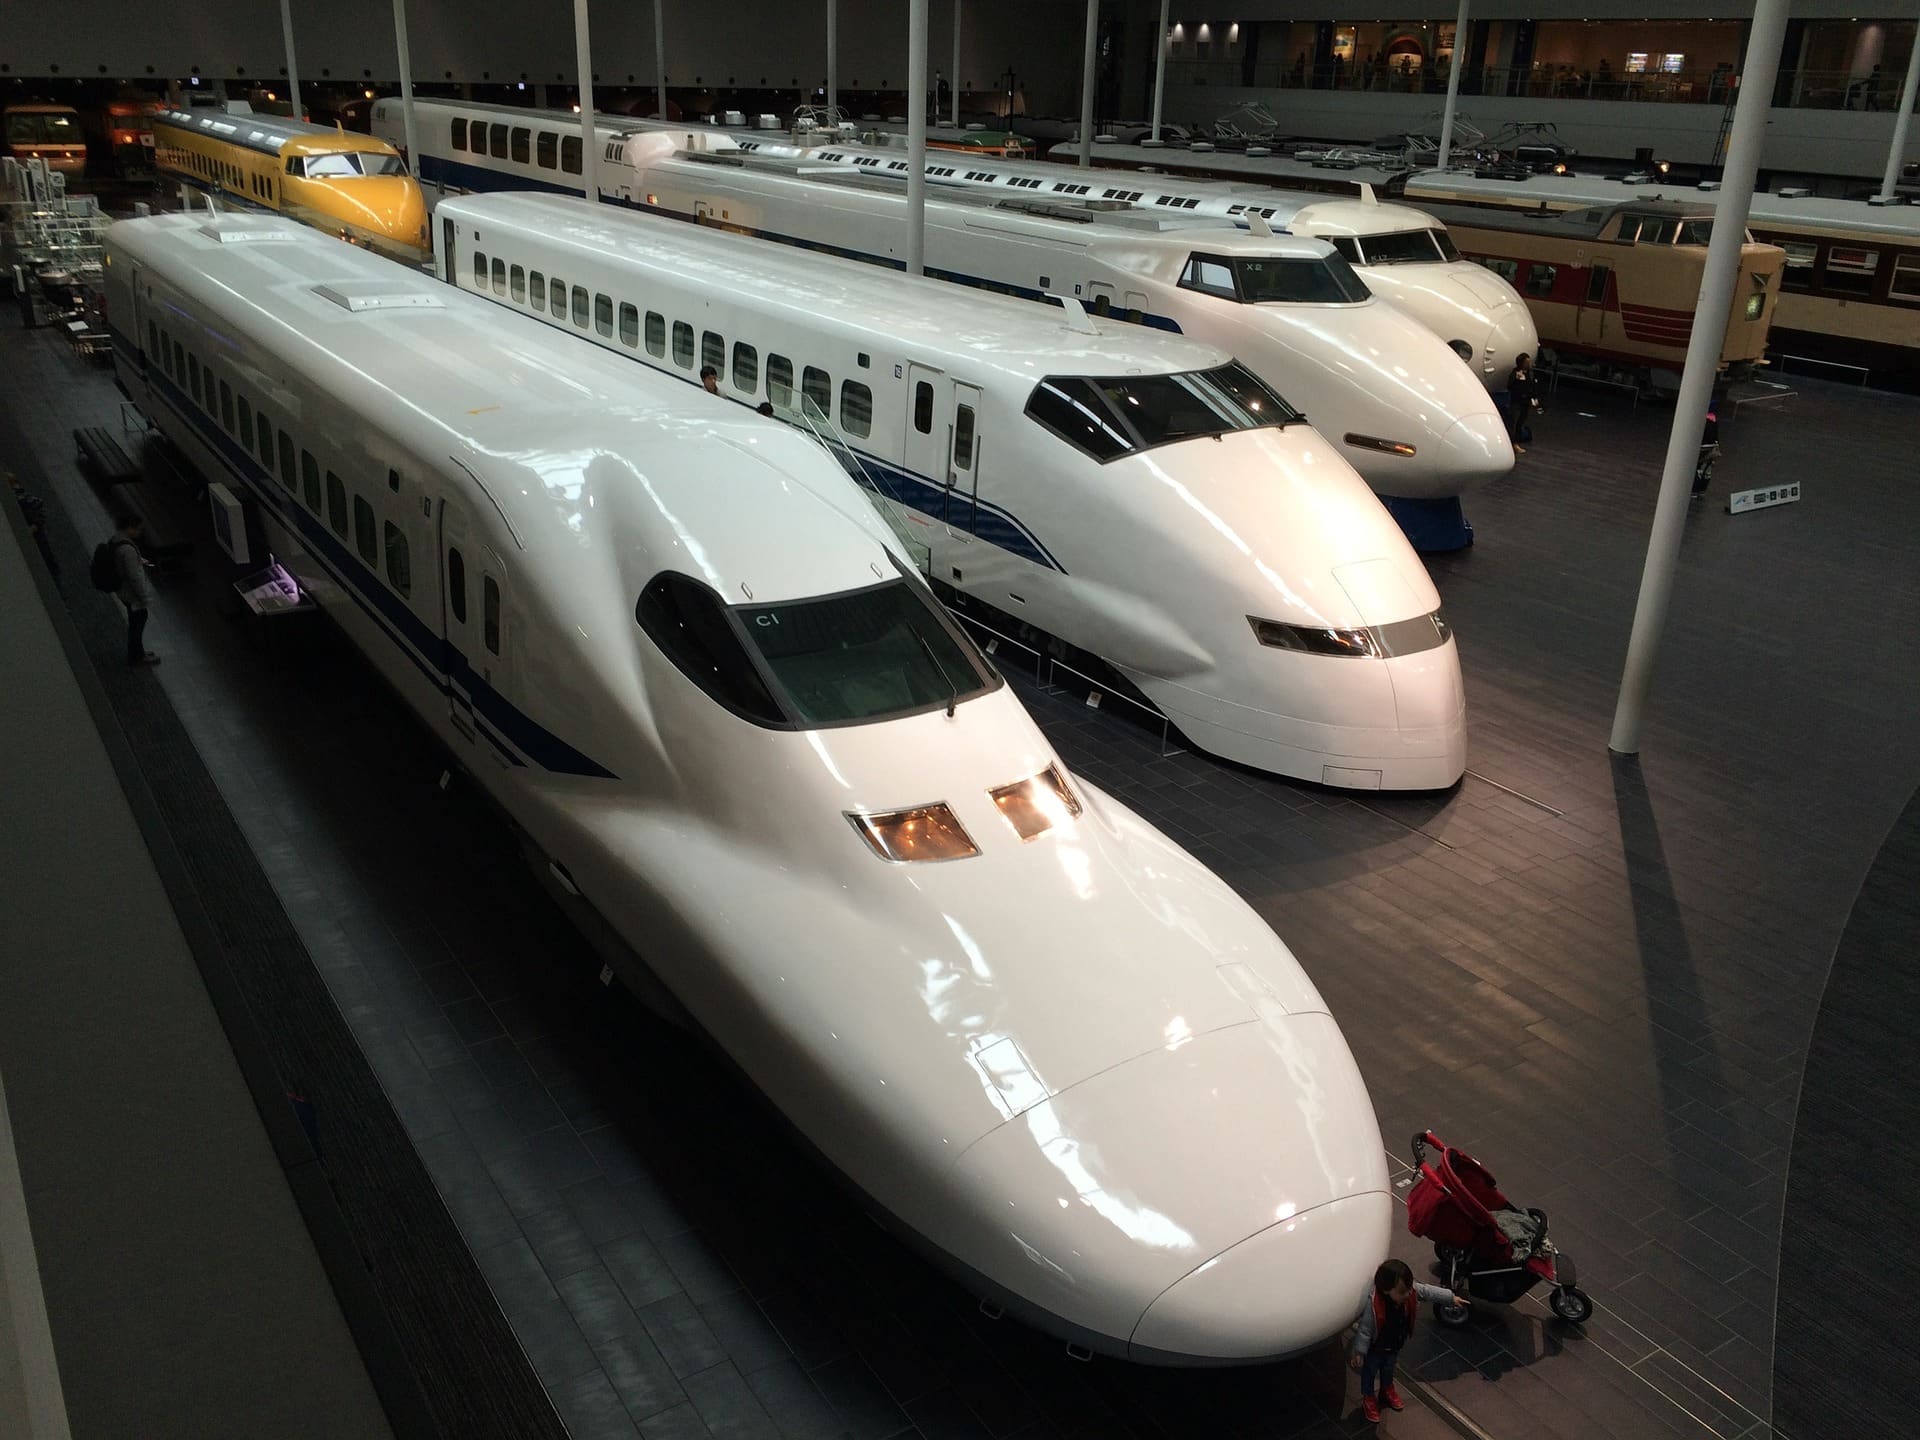 The Shinkansen when visiting Japan